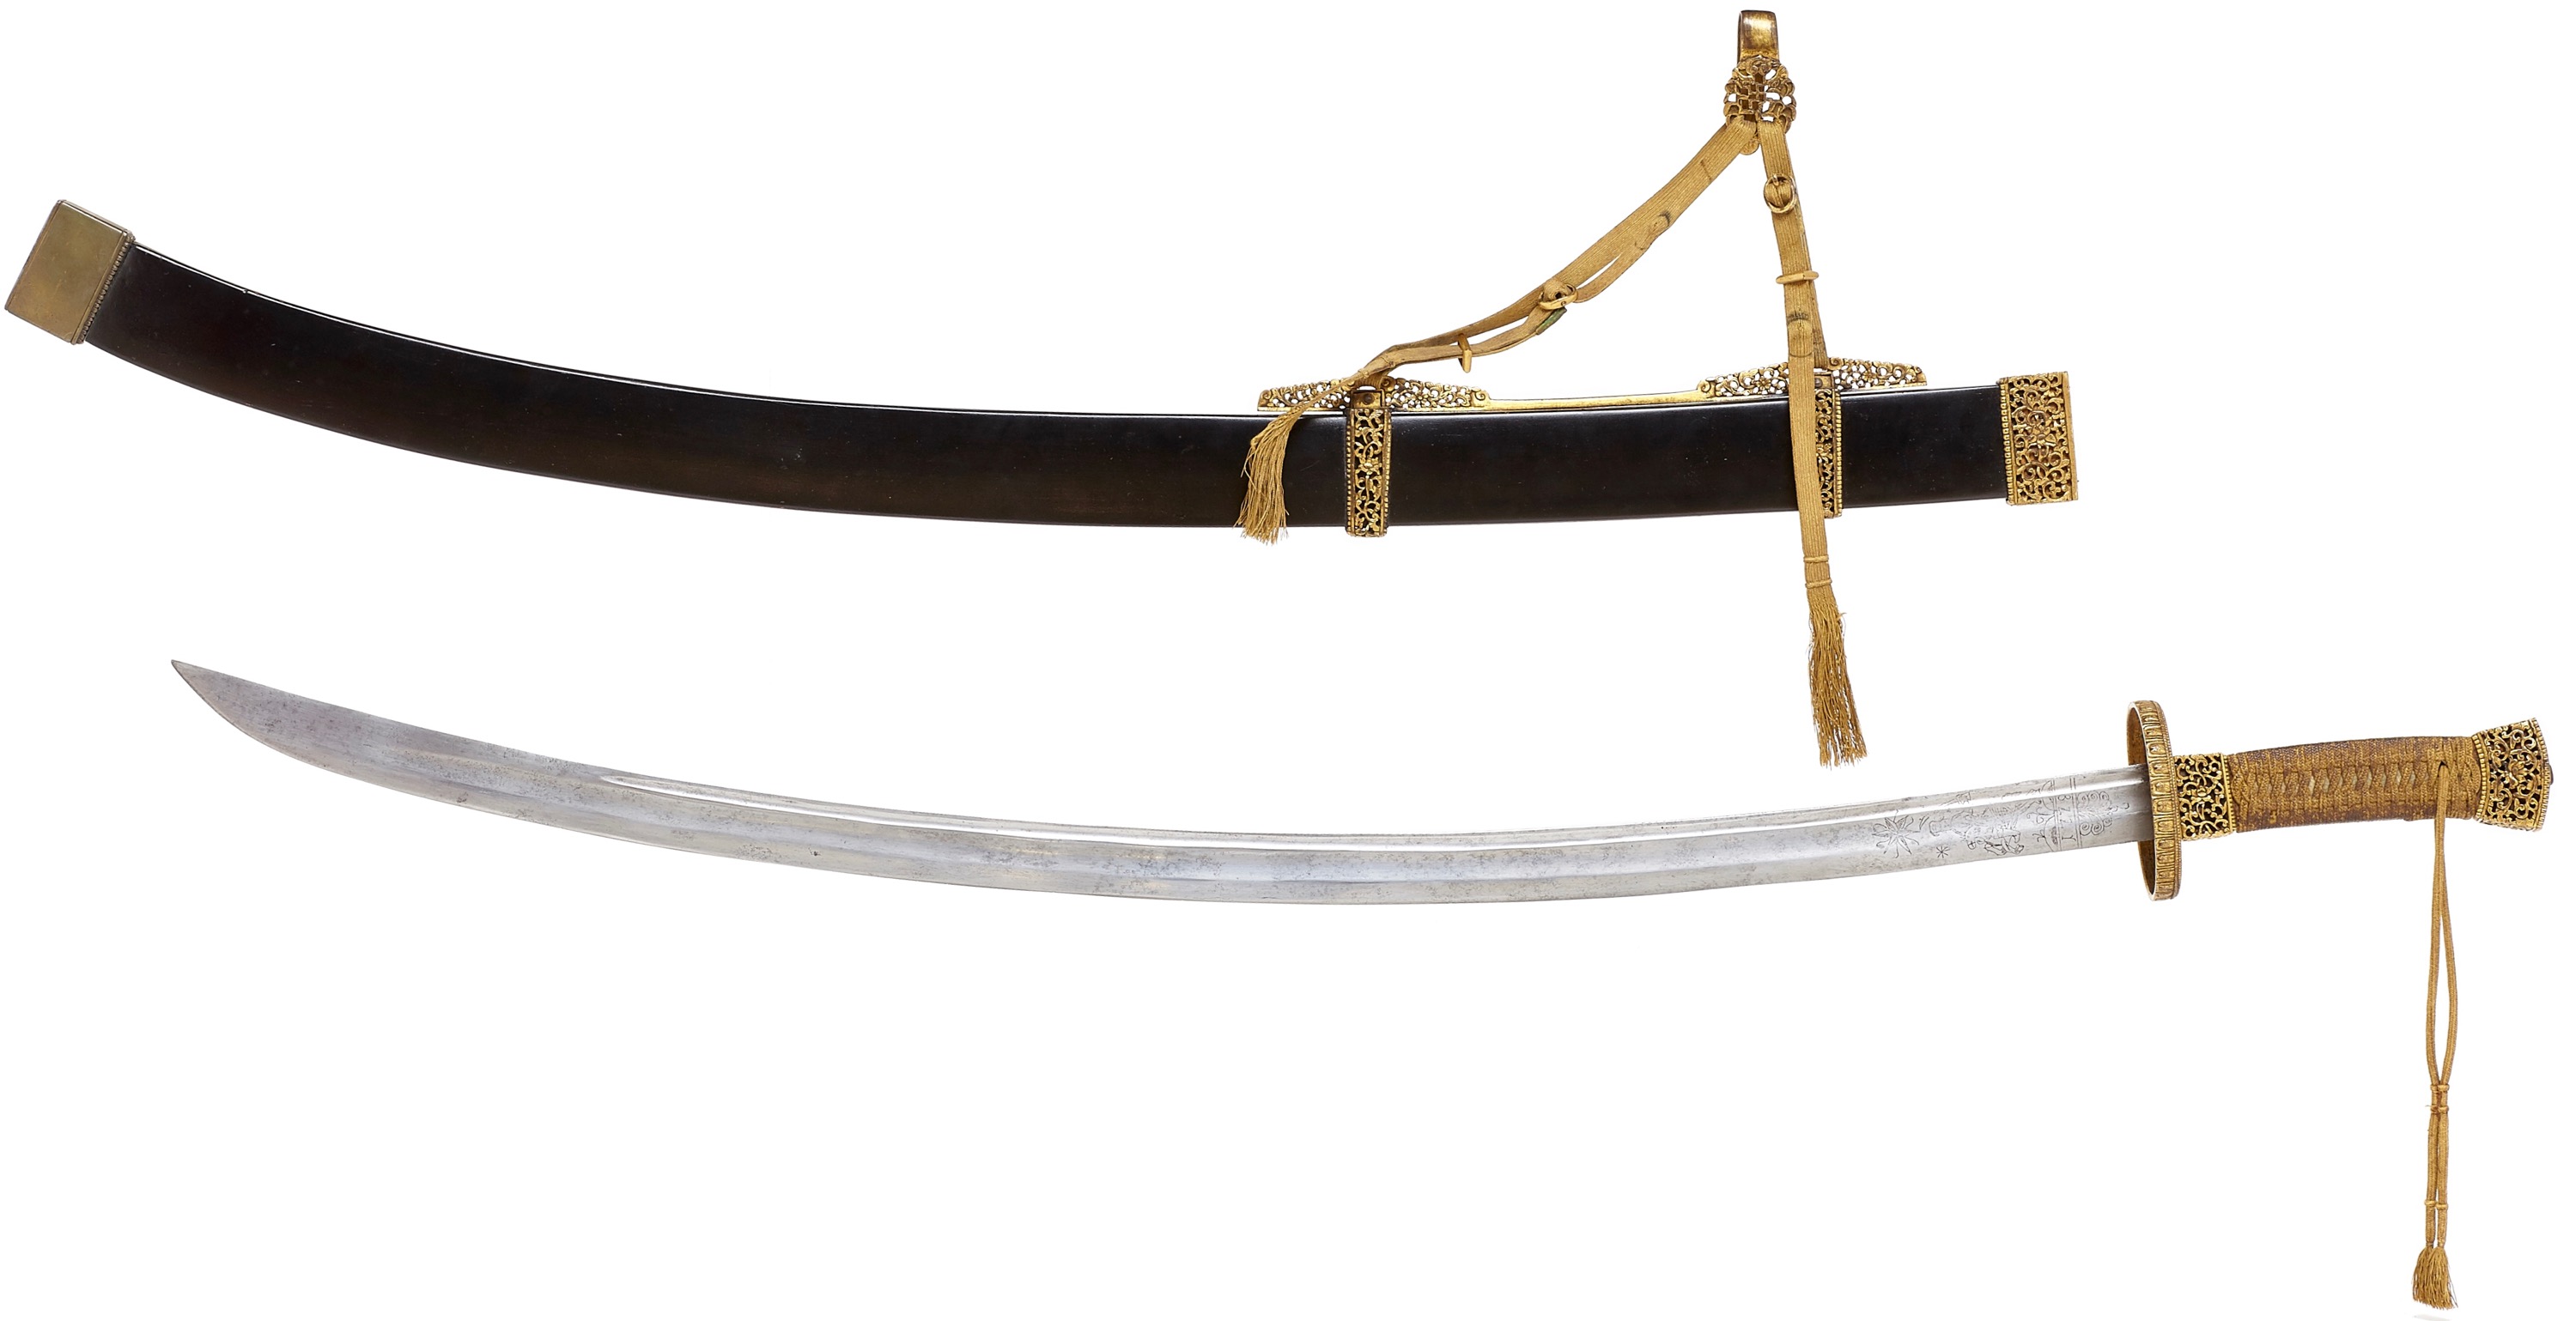 18th century loukong saber